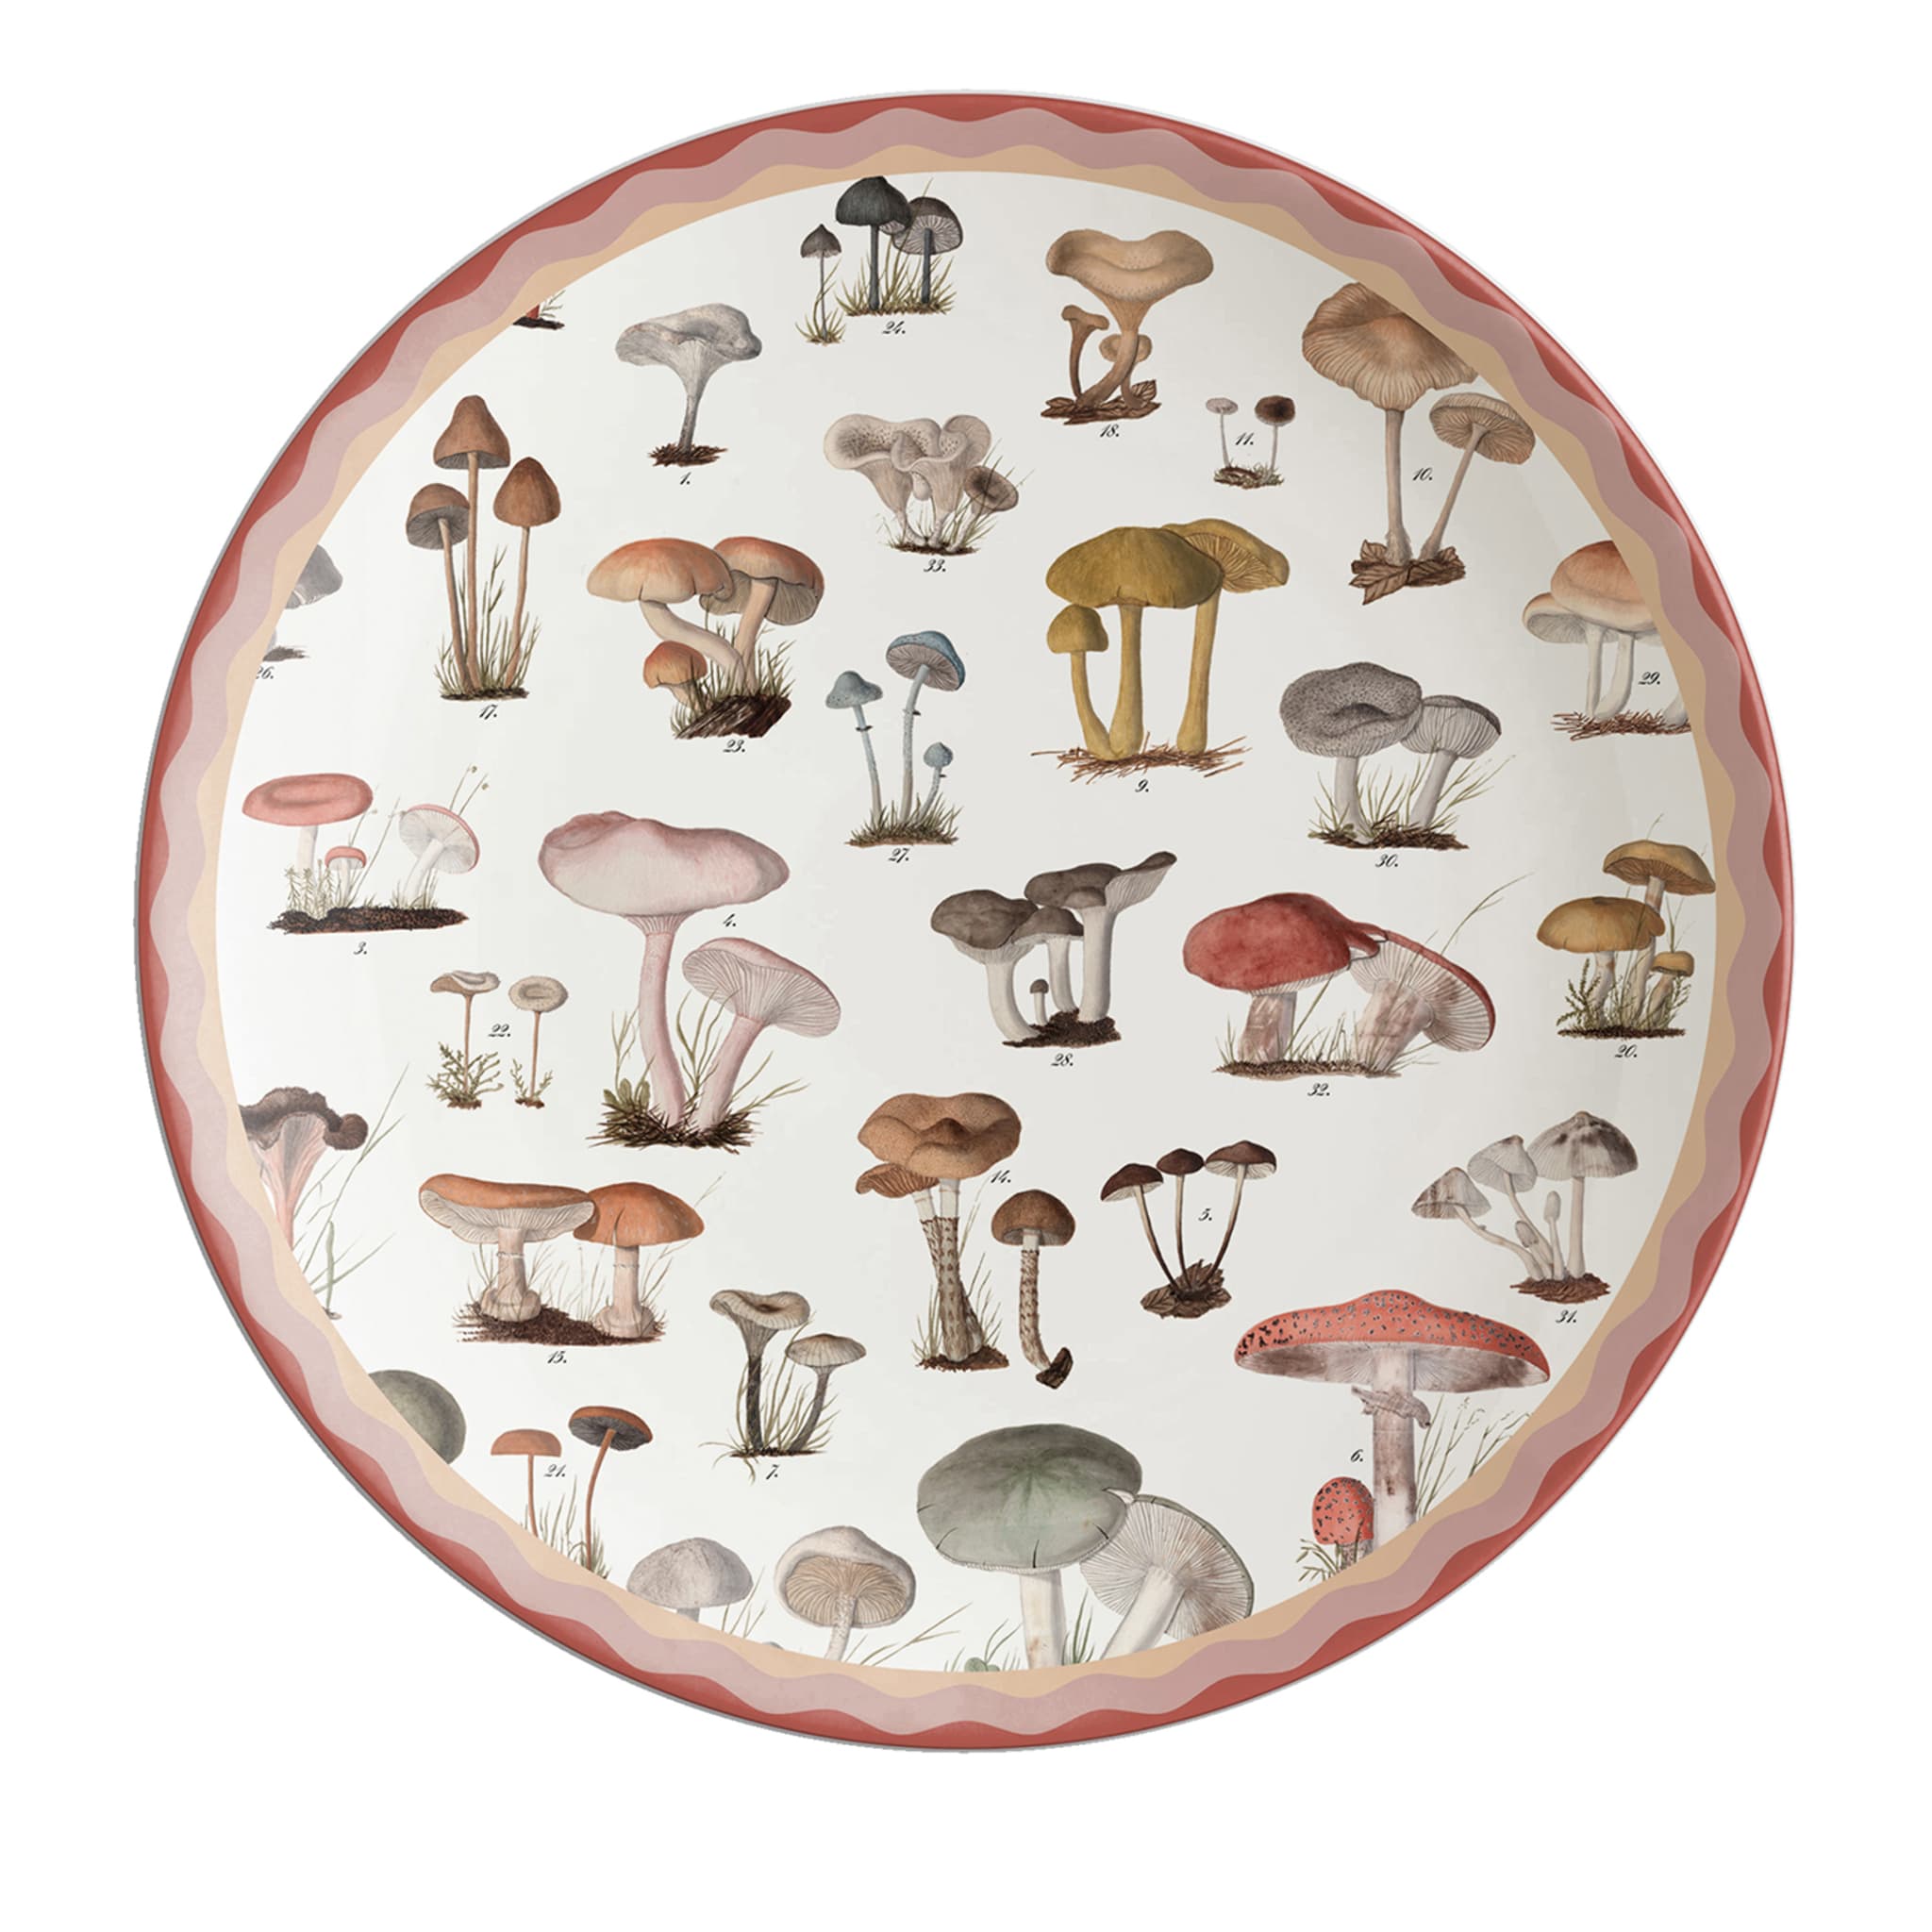 Cabinet de Curiosités Mushrooms Charger Plate - Main view